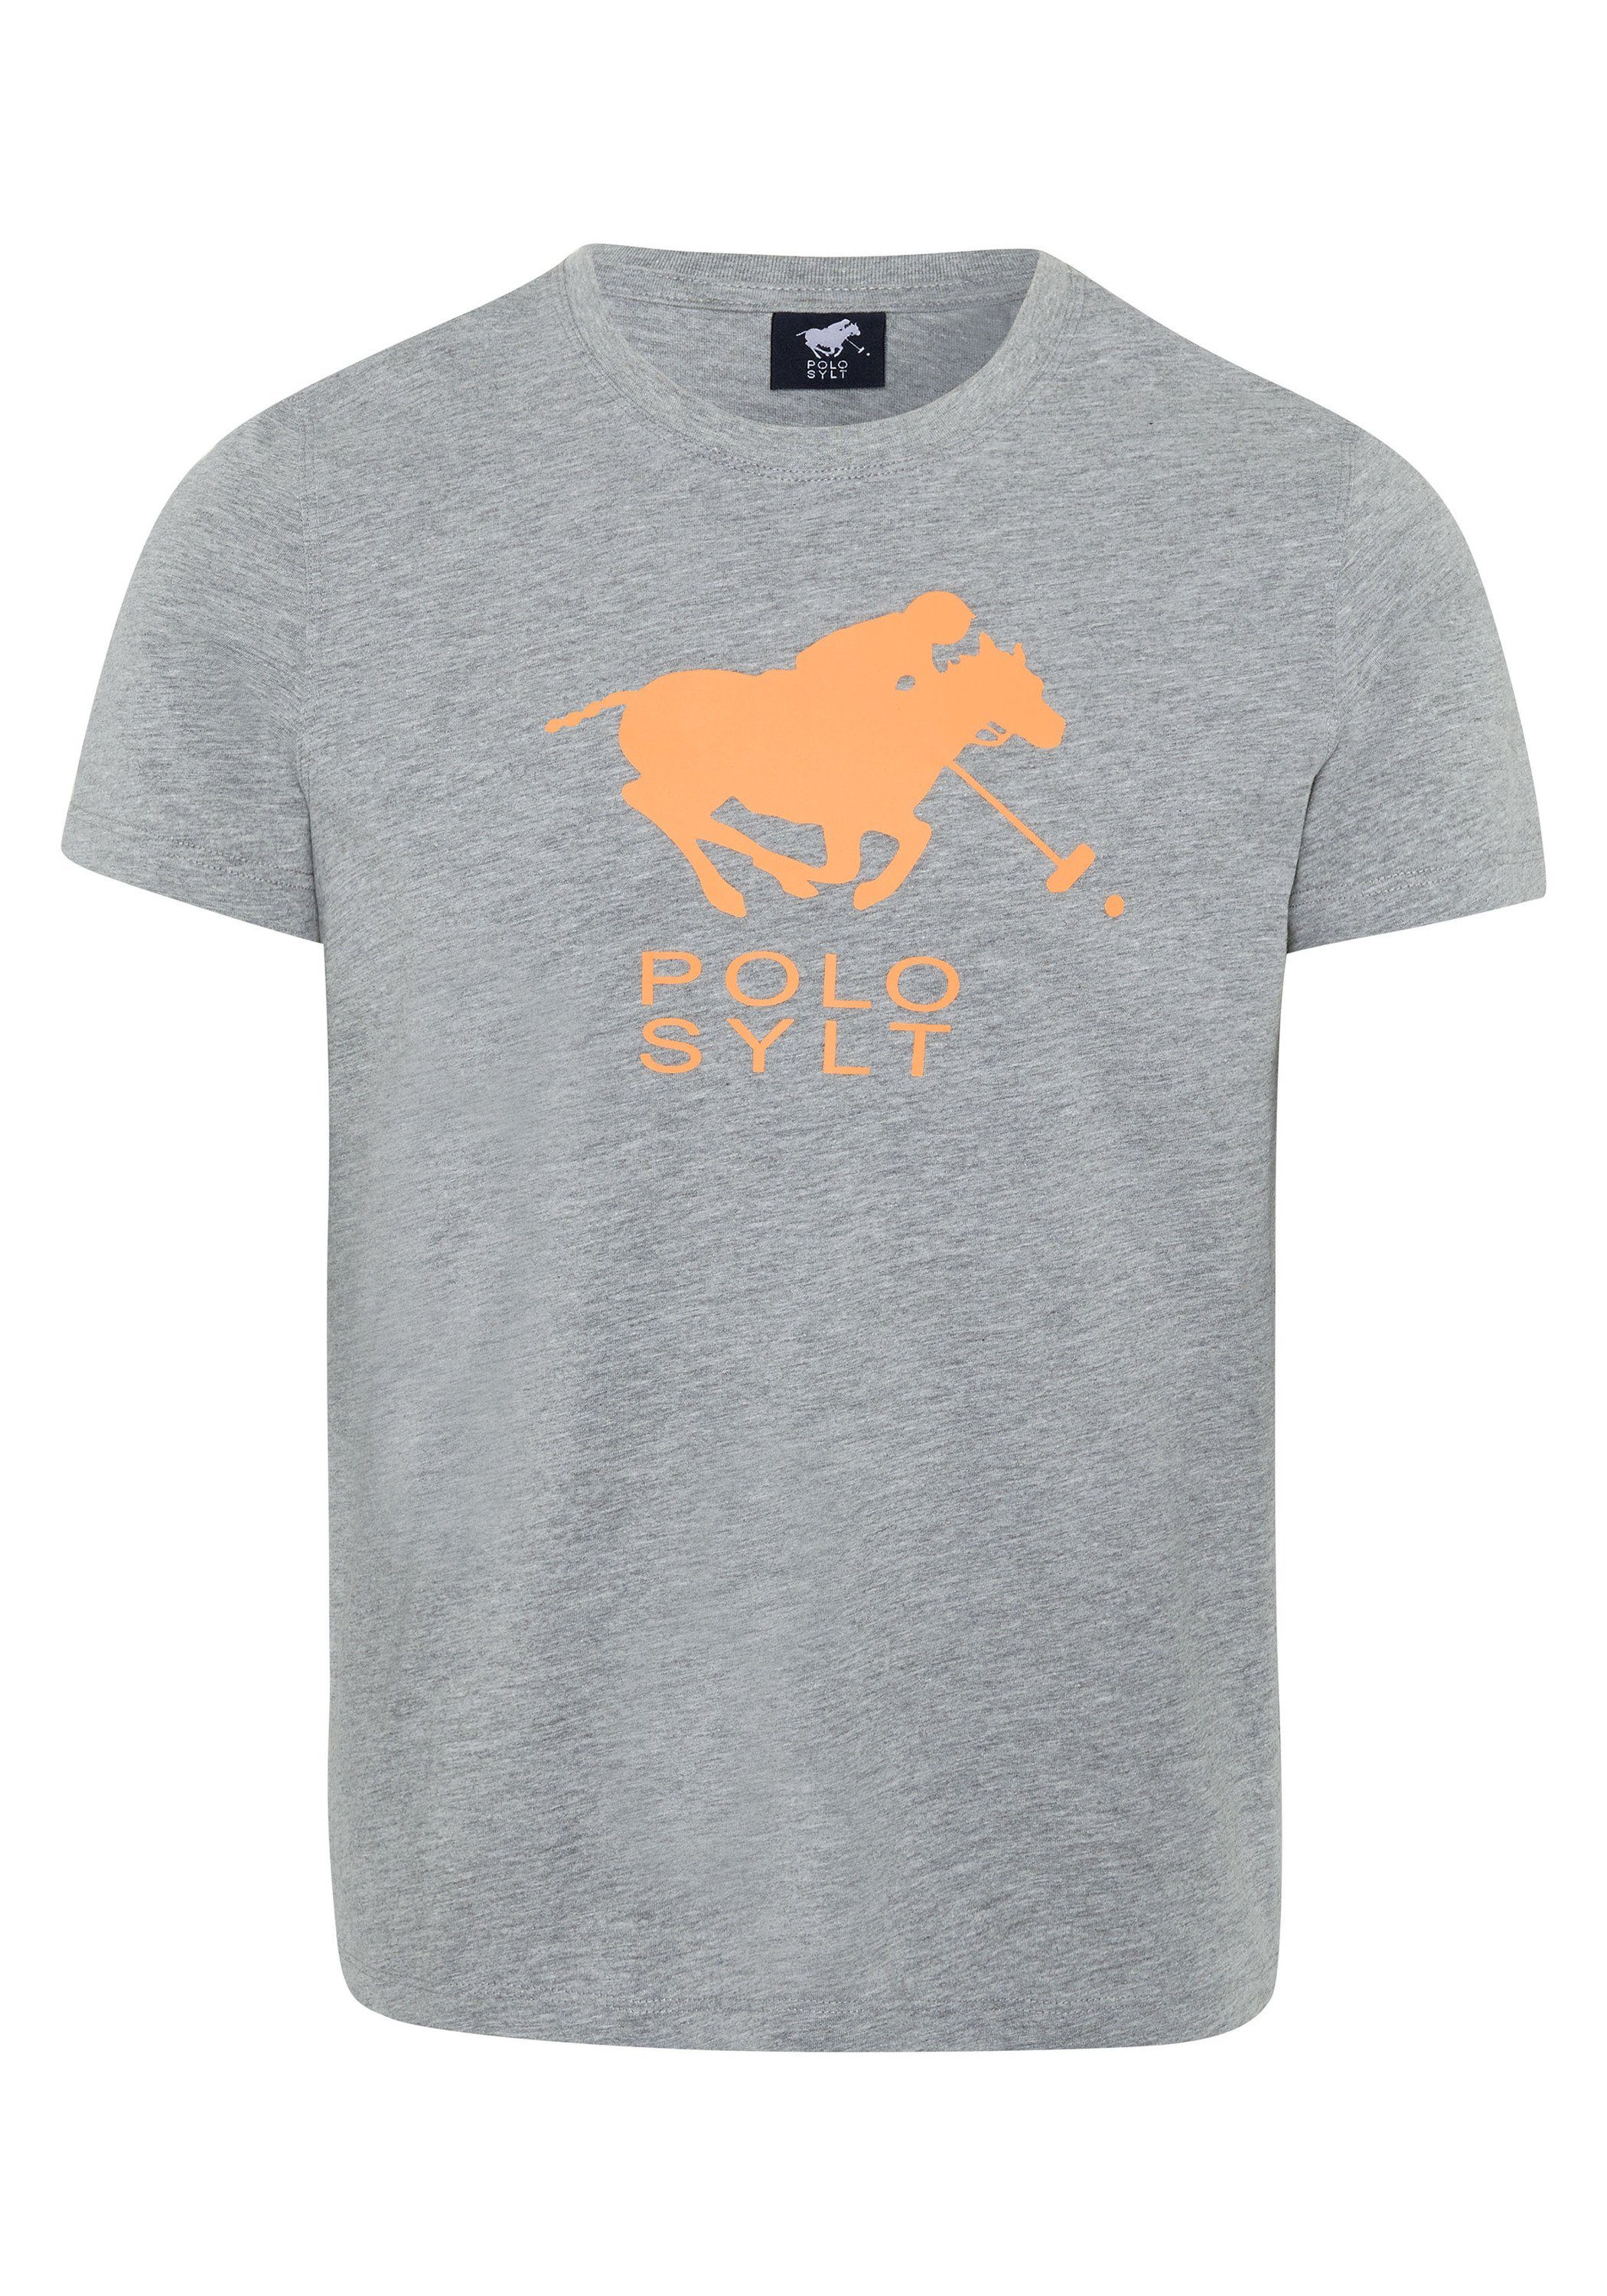 Polo Sylt Print-Shirt mit Neon Logo Frontprint 17-4402M Neutral Gray Melange